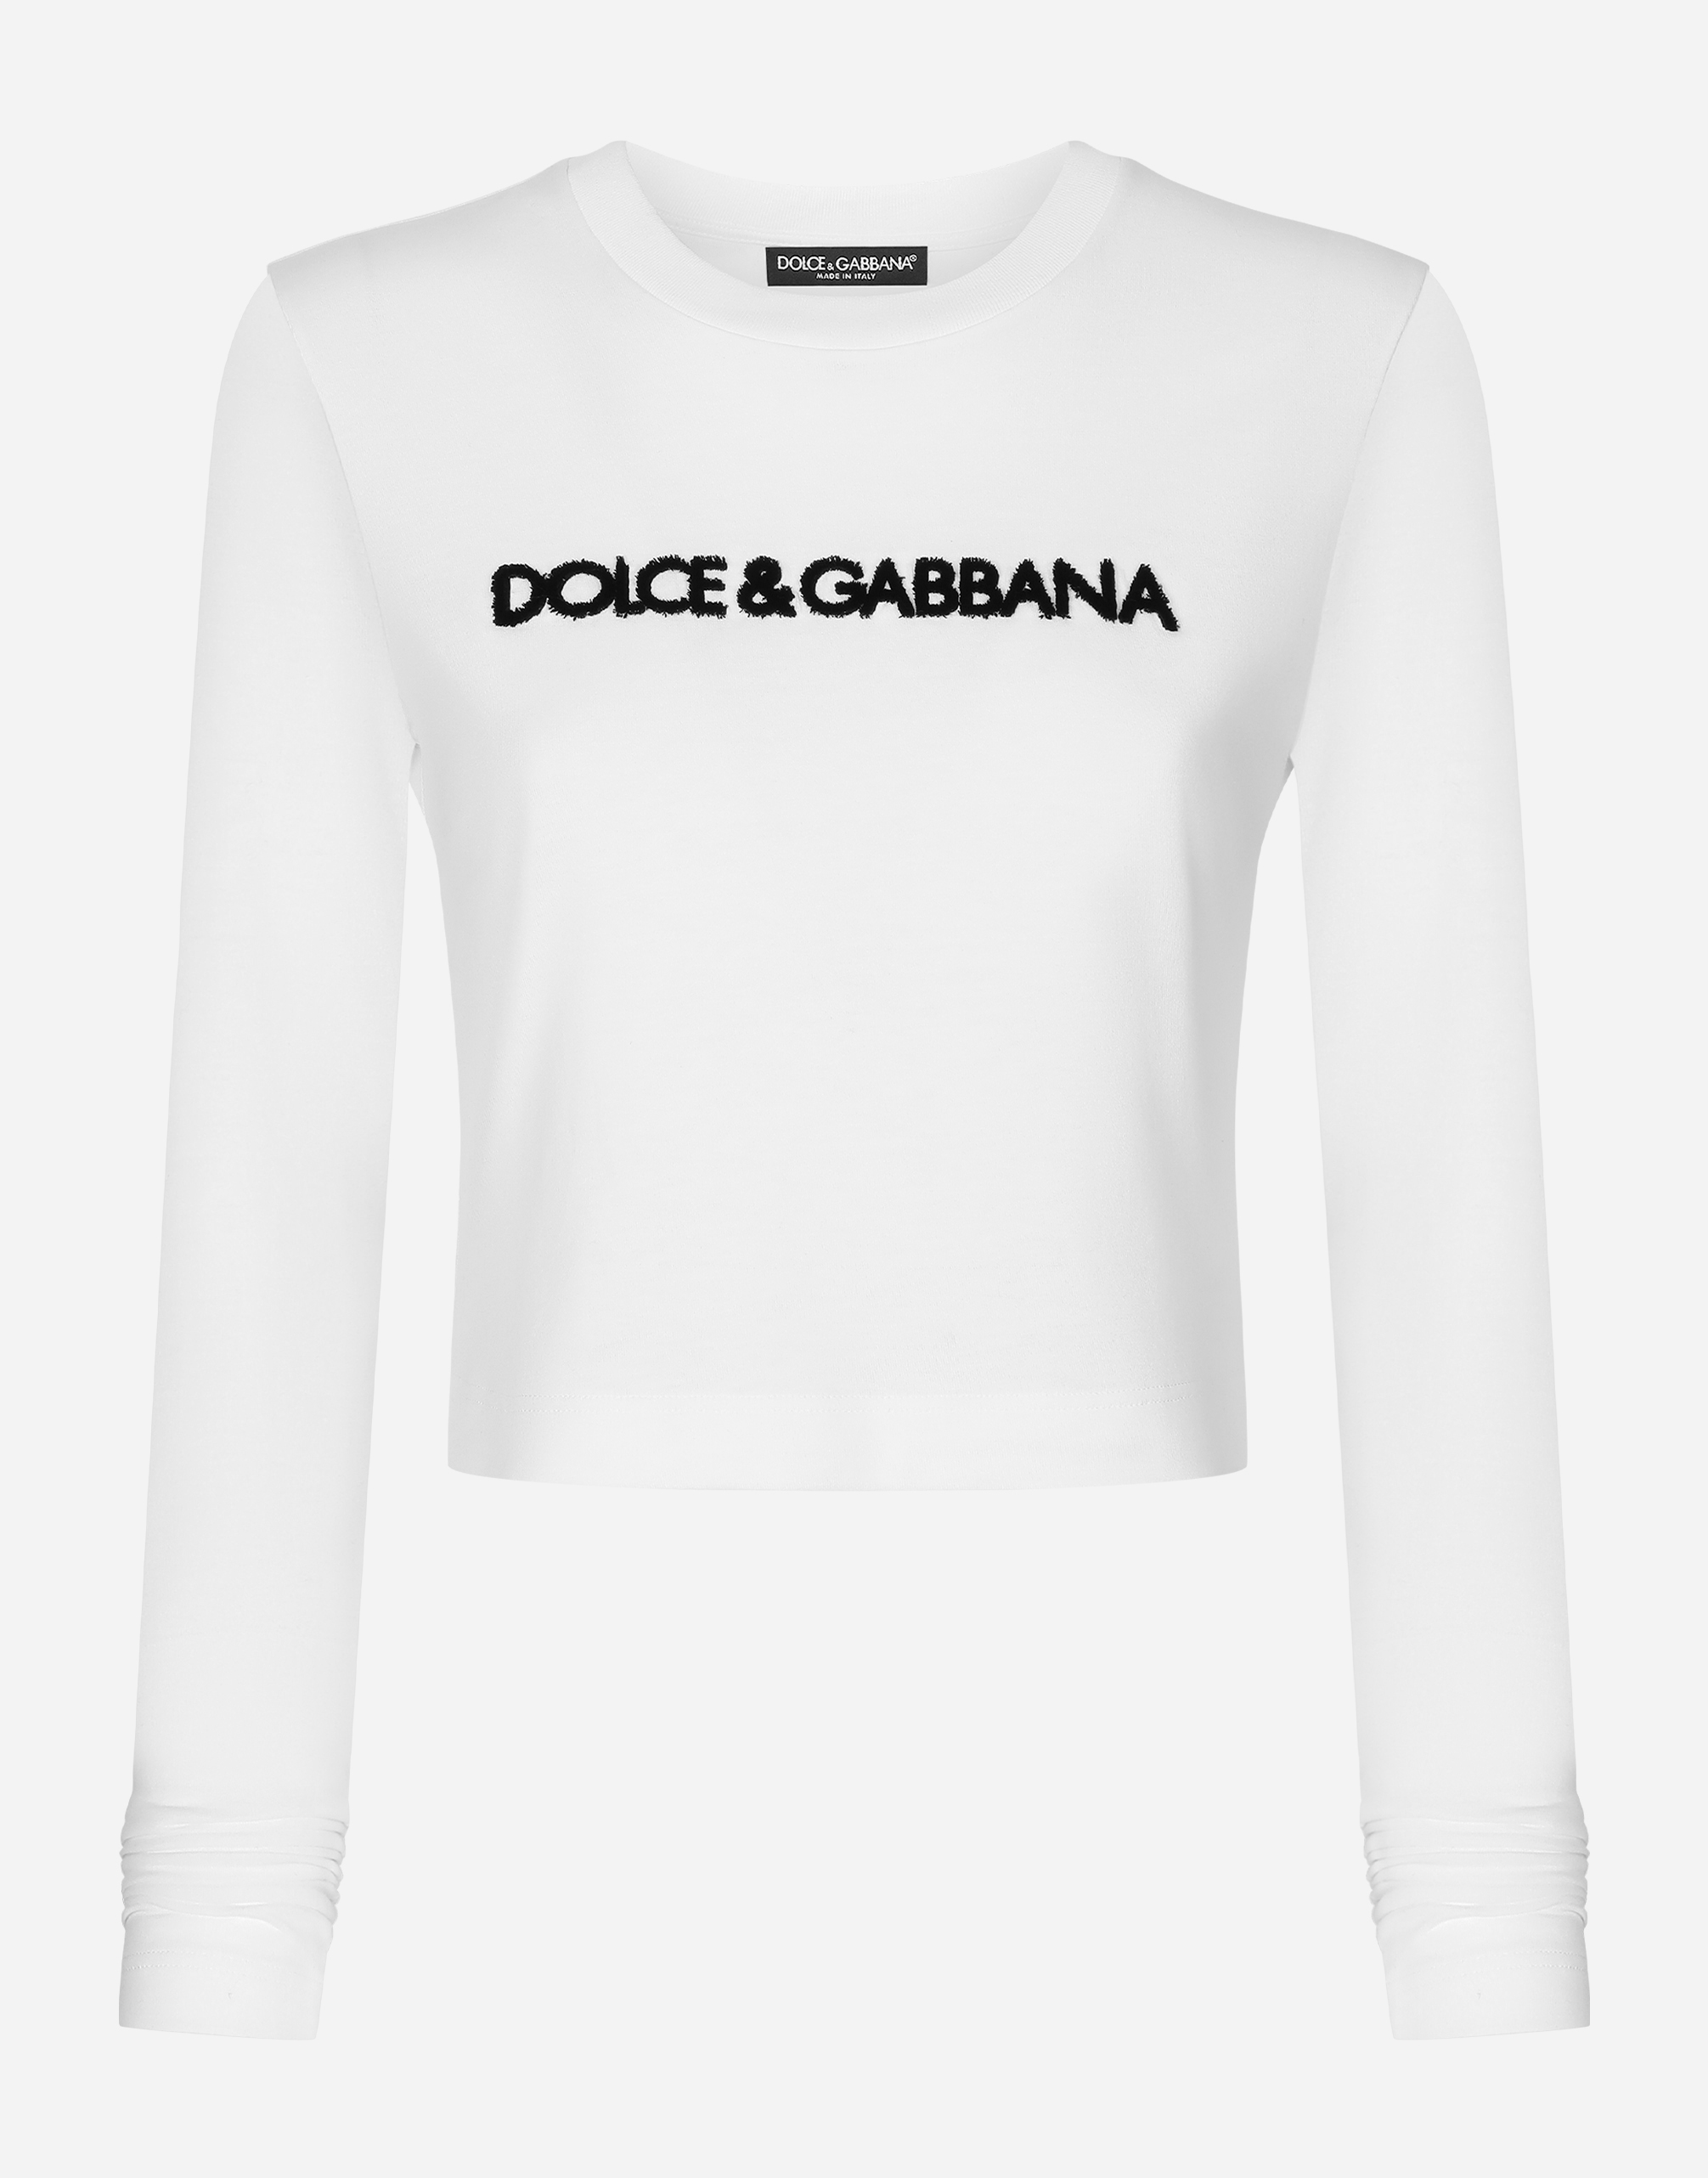 Long-sleeved T-shirt with Dolce&Gabbana logo